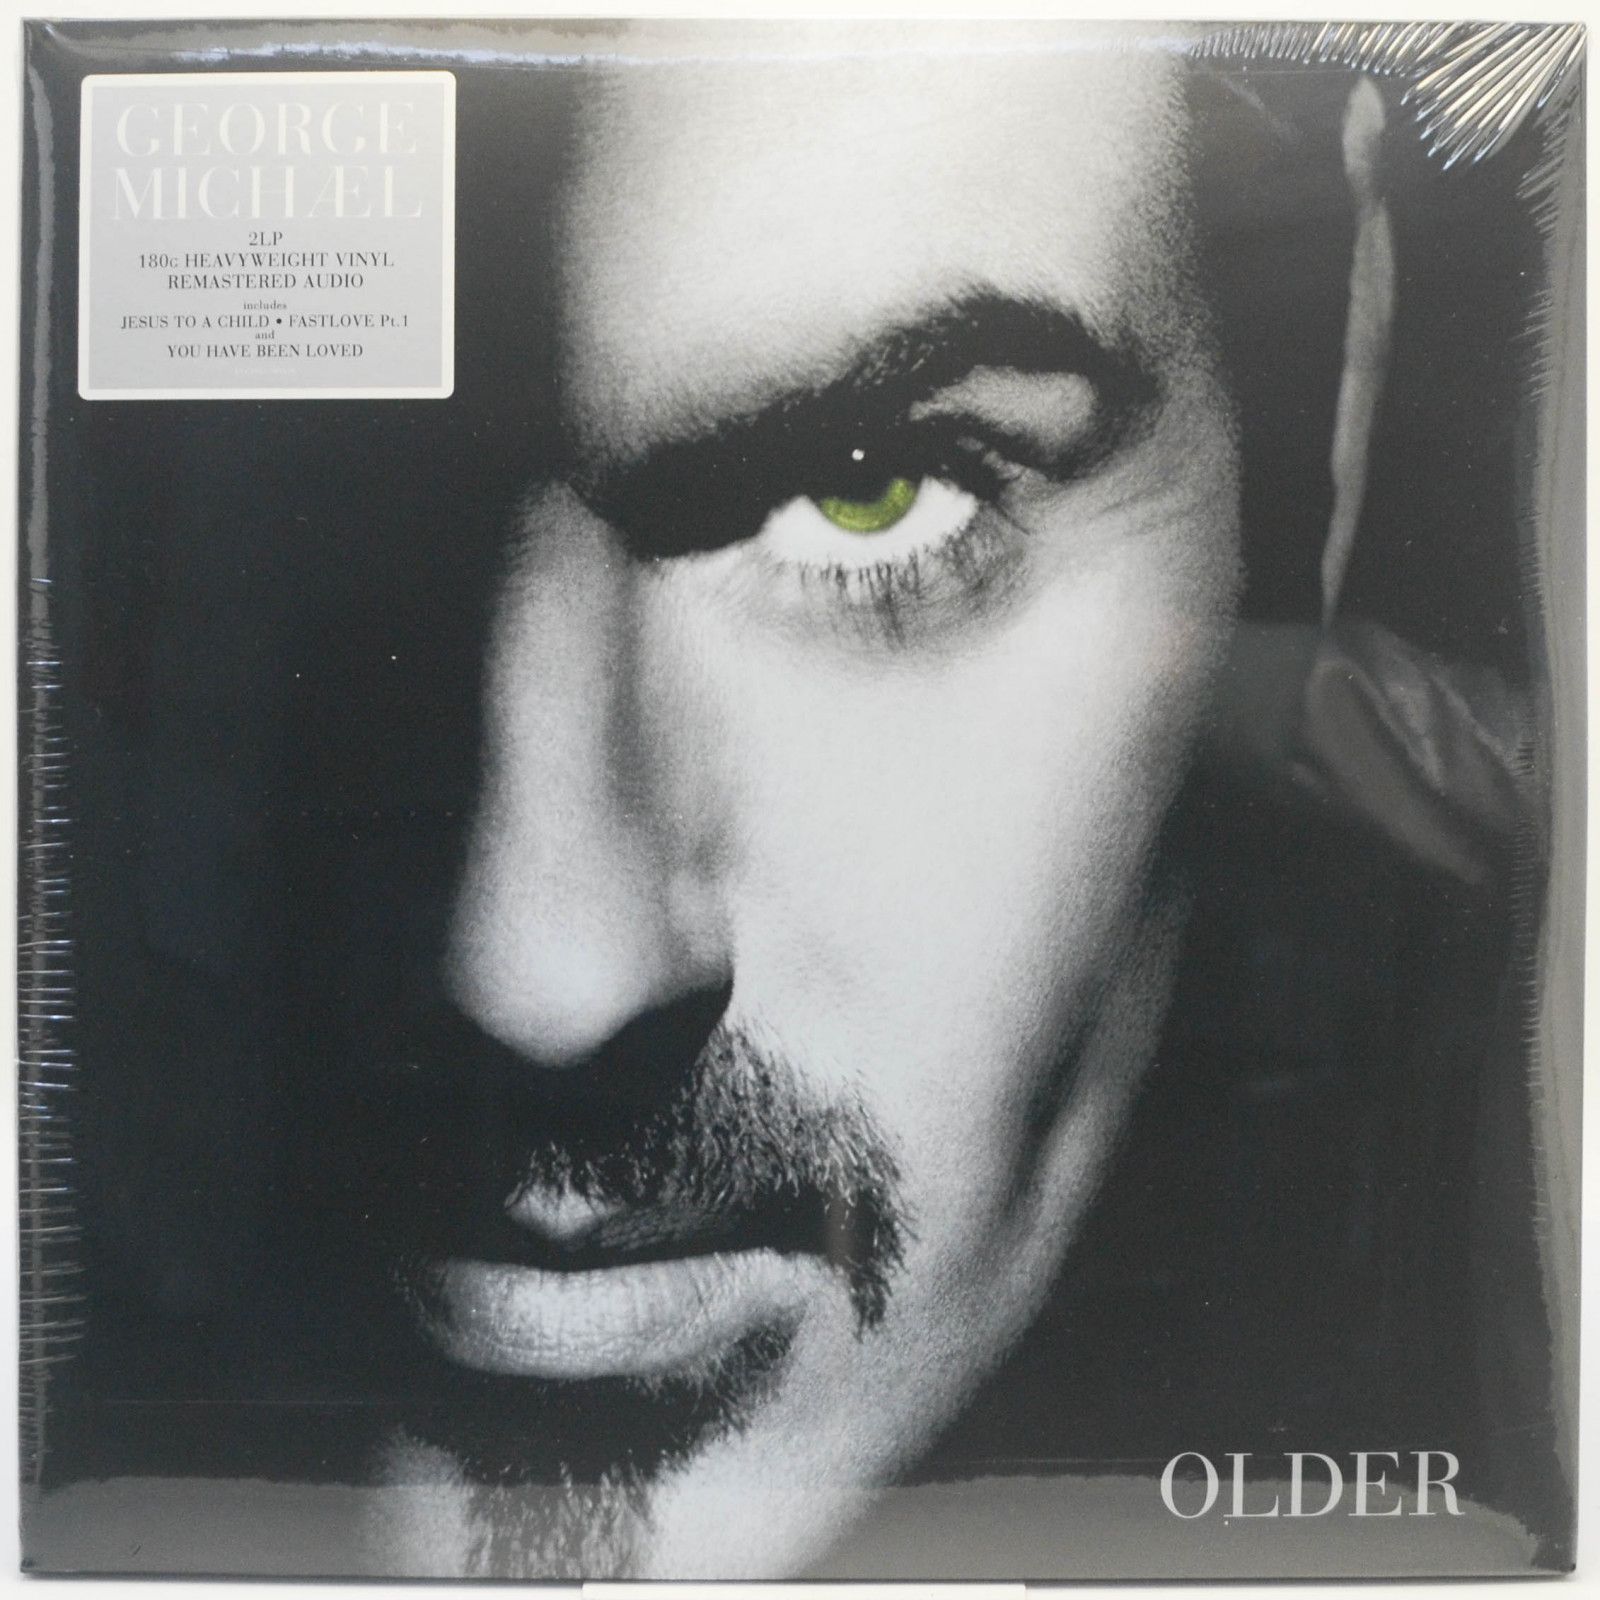 George Michael — Older (2LP), 1996